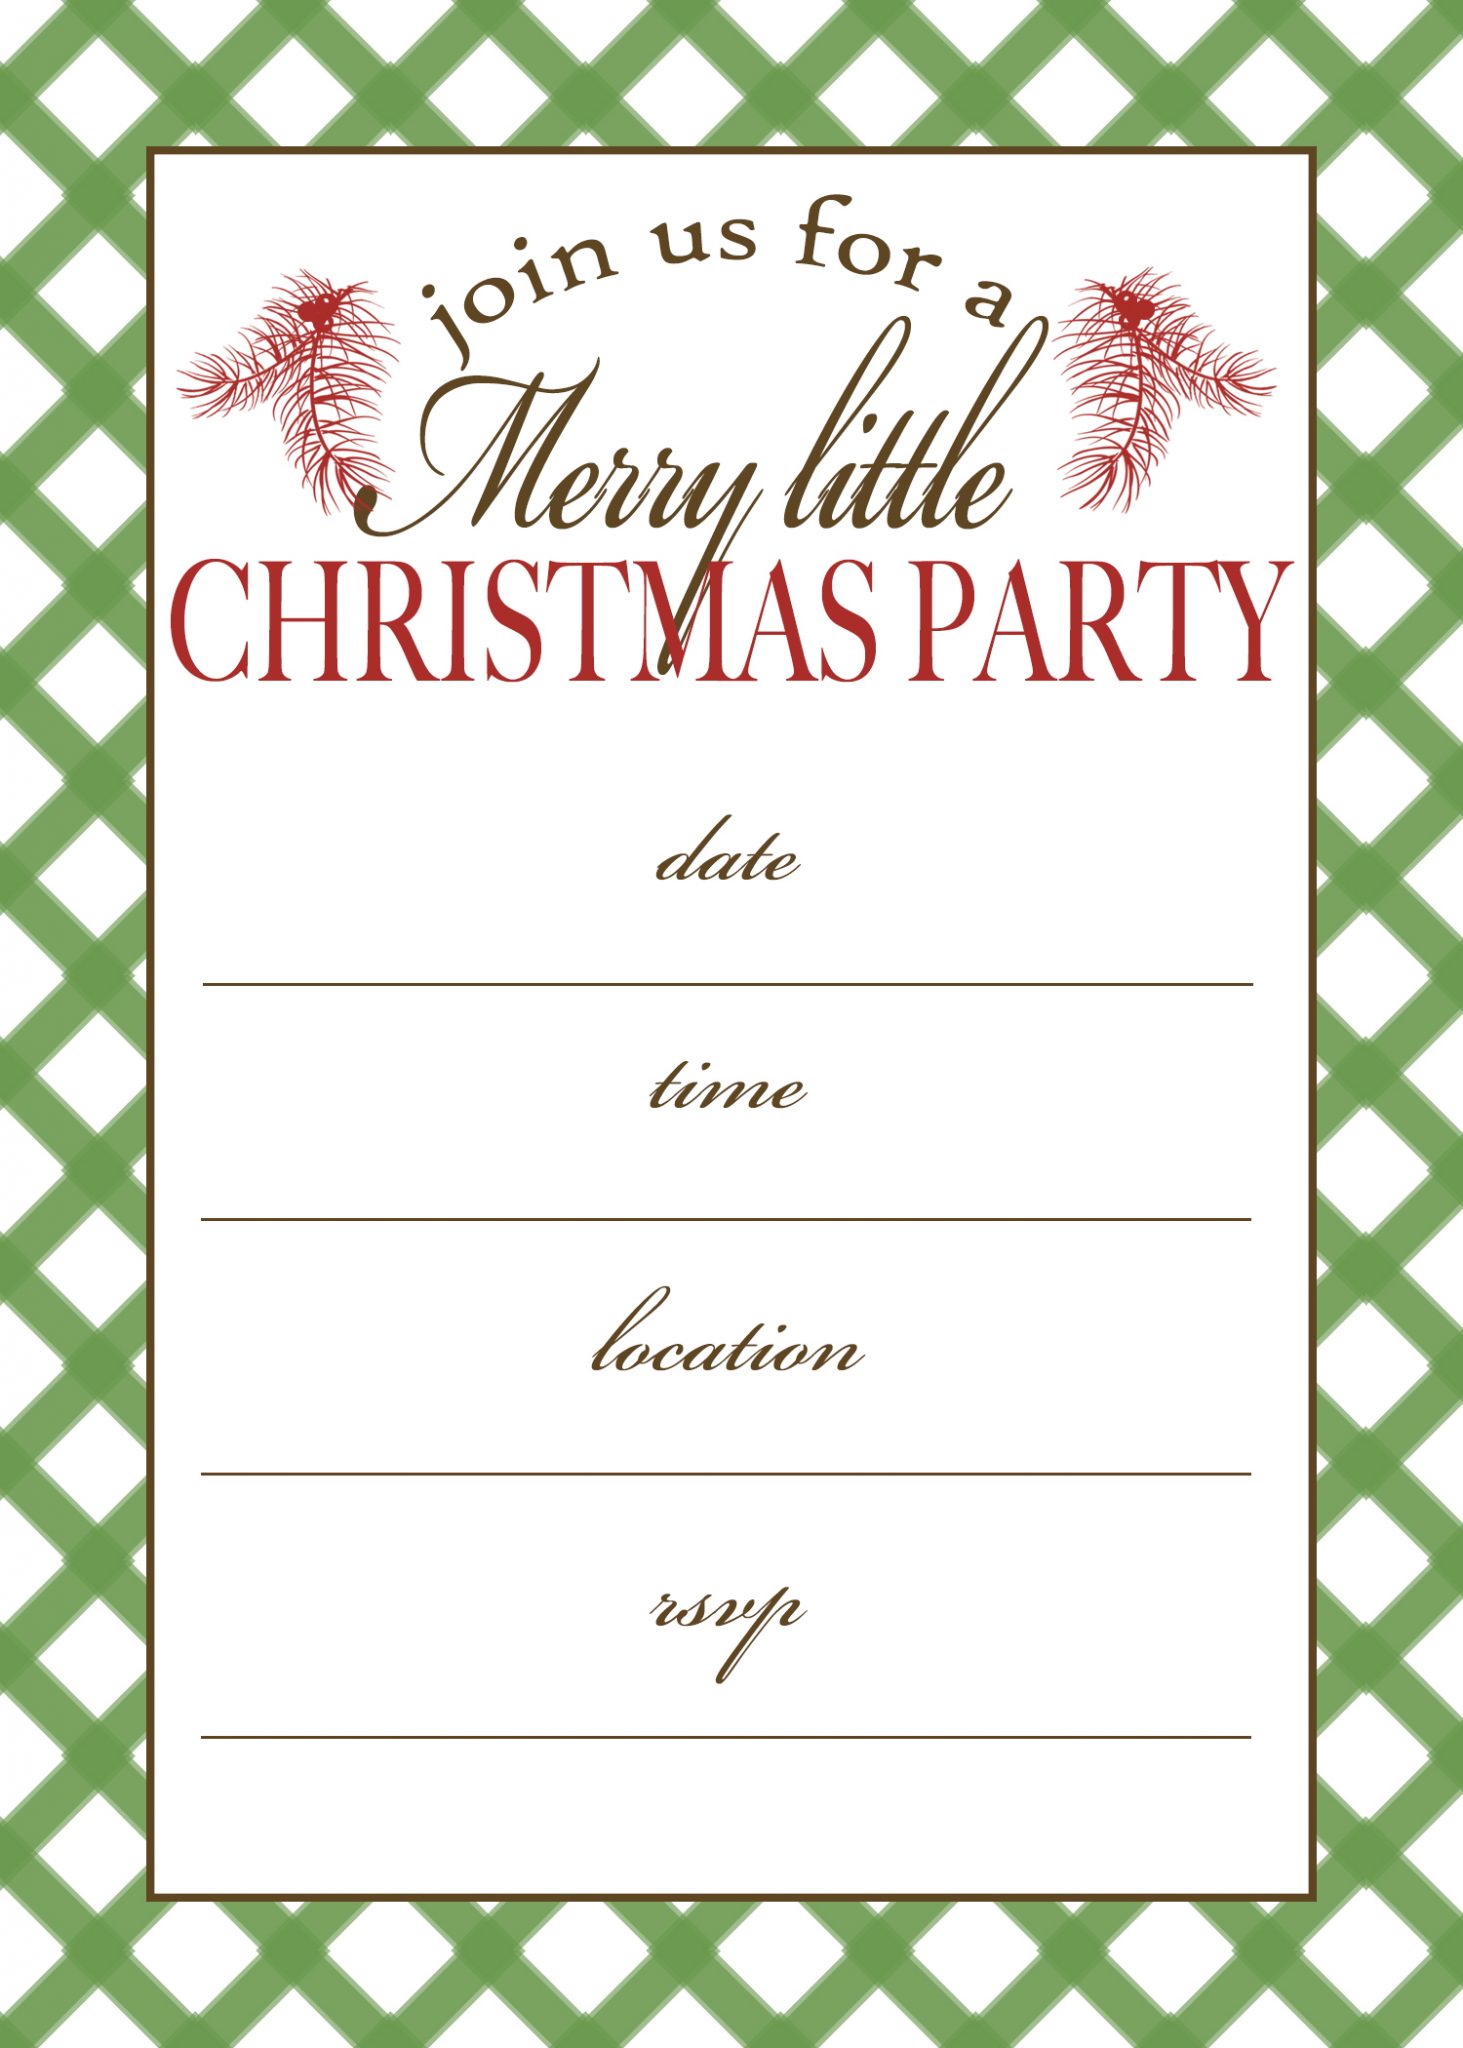 Free Printable Christmas Party Invitations_19254